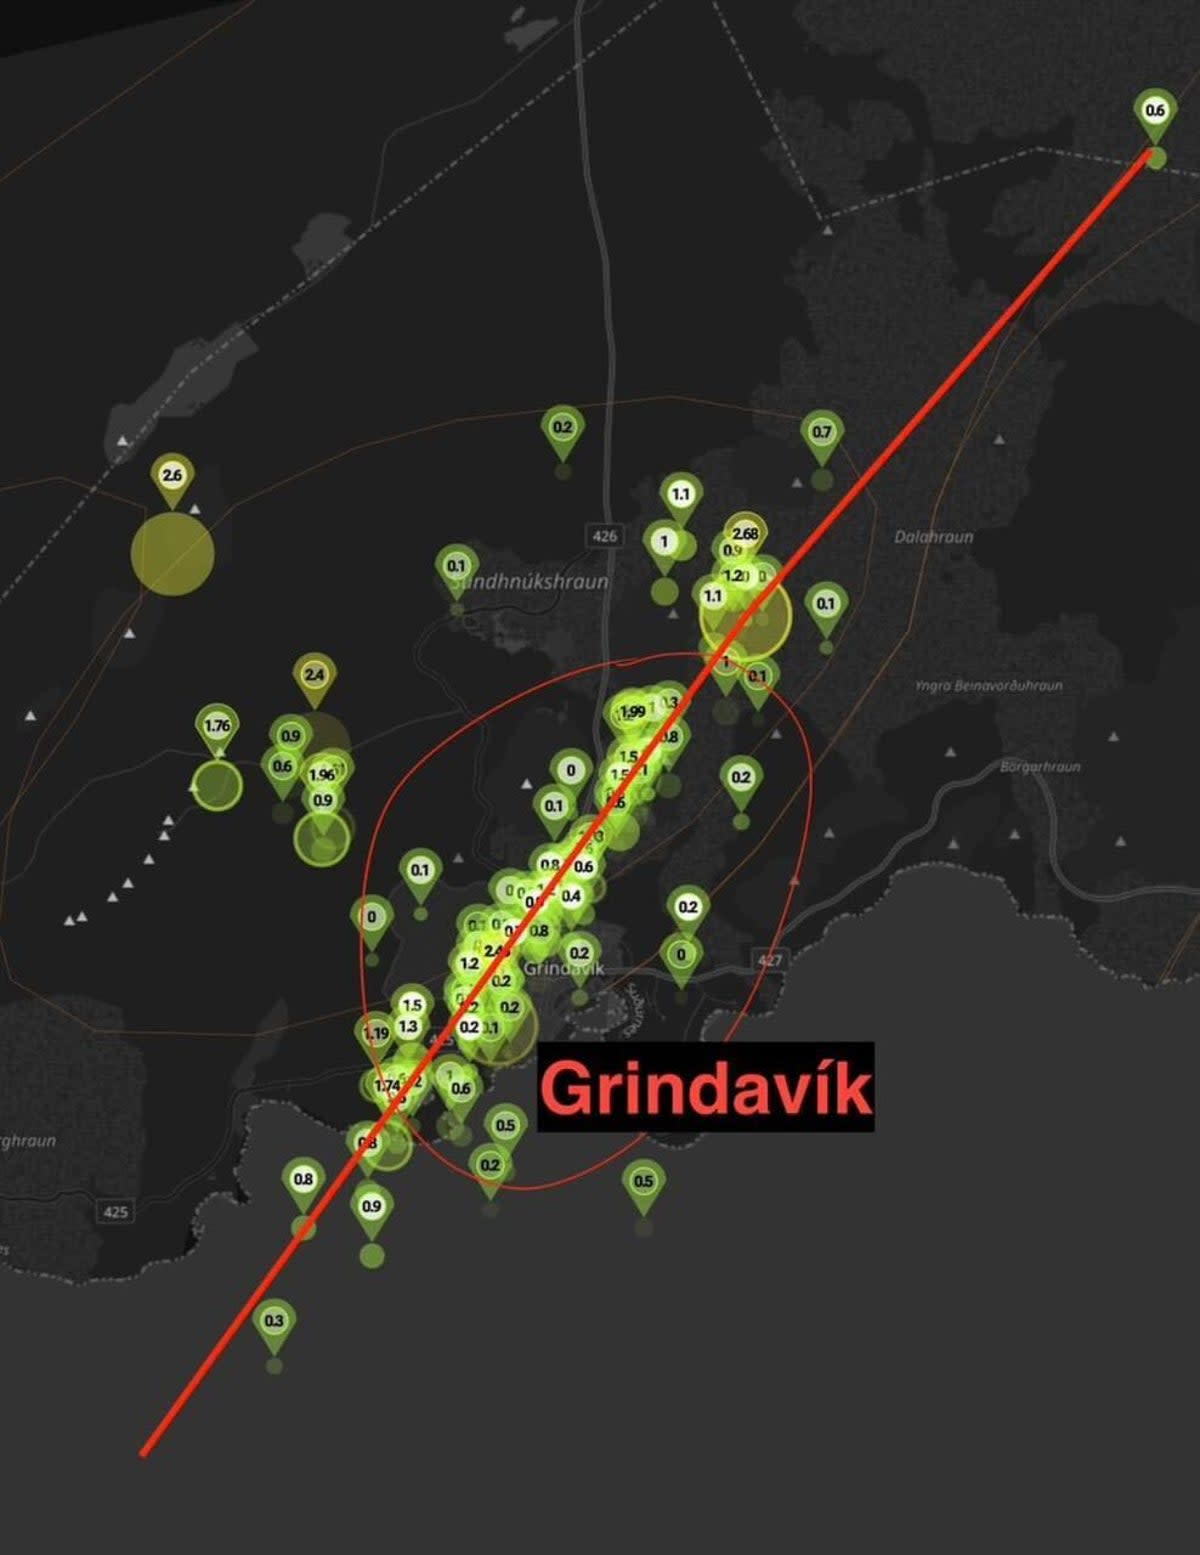 Seismic activity mapped around Grindavik (Provided)